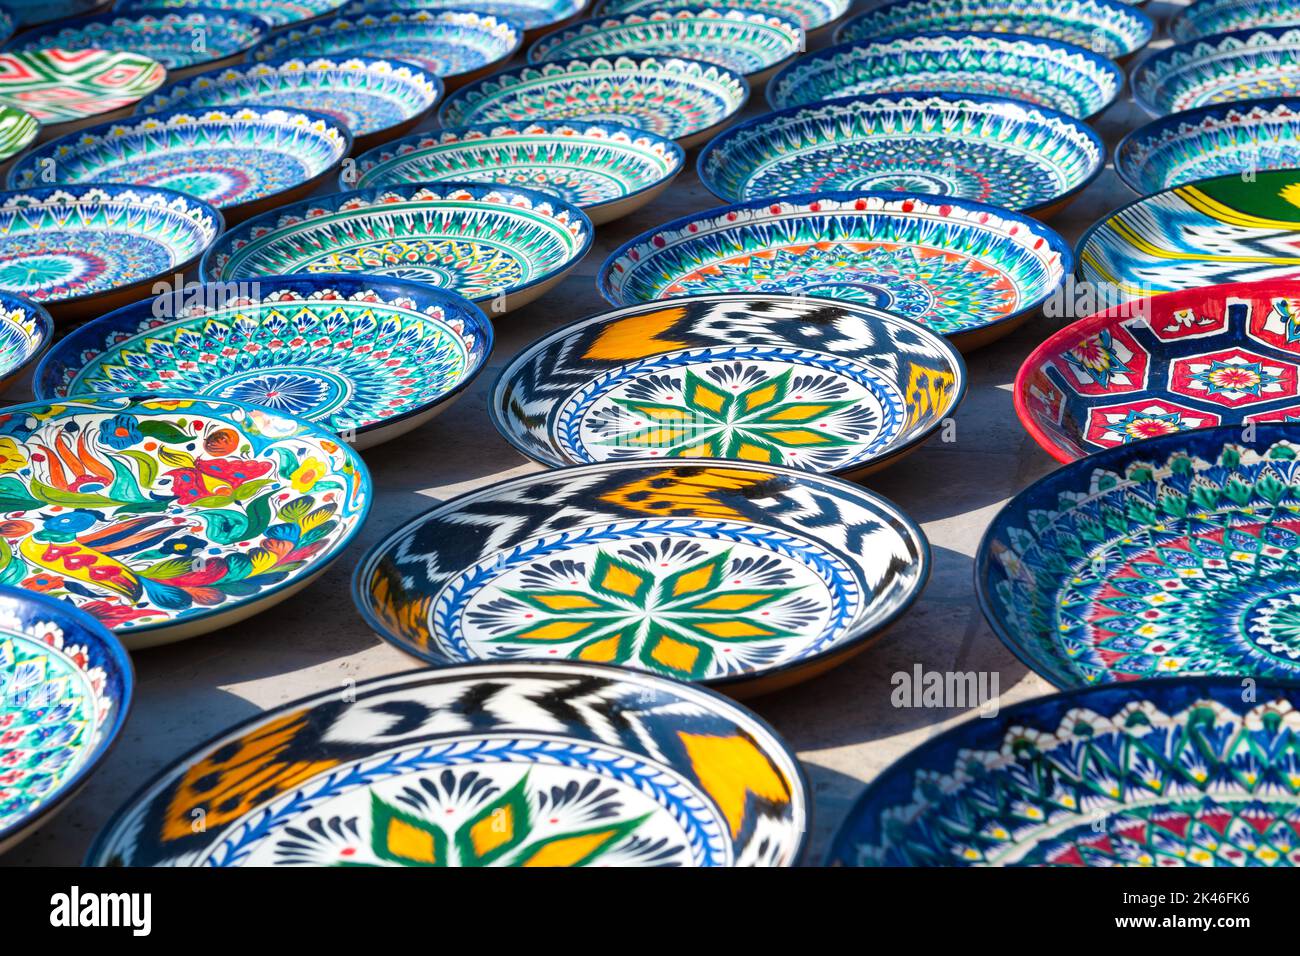 BUCHARA, USBEKISTAN - 09. SEPTEMBER 2022: Bunte Teller mit traditionellen nationalen Mustern aus nächster Nähe Stockfoto